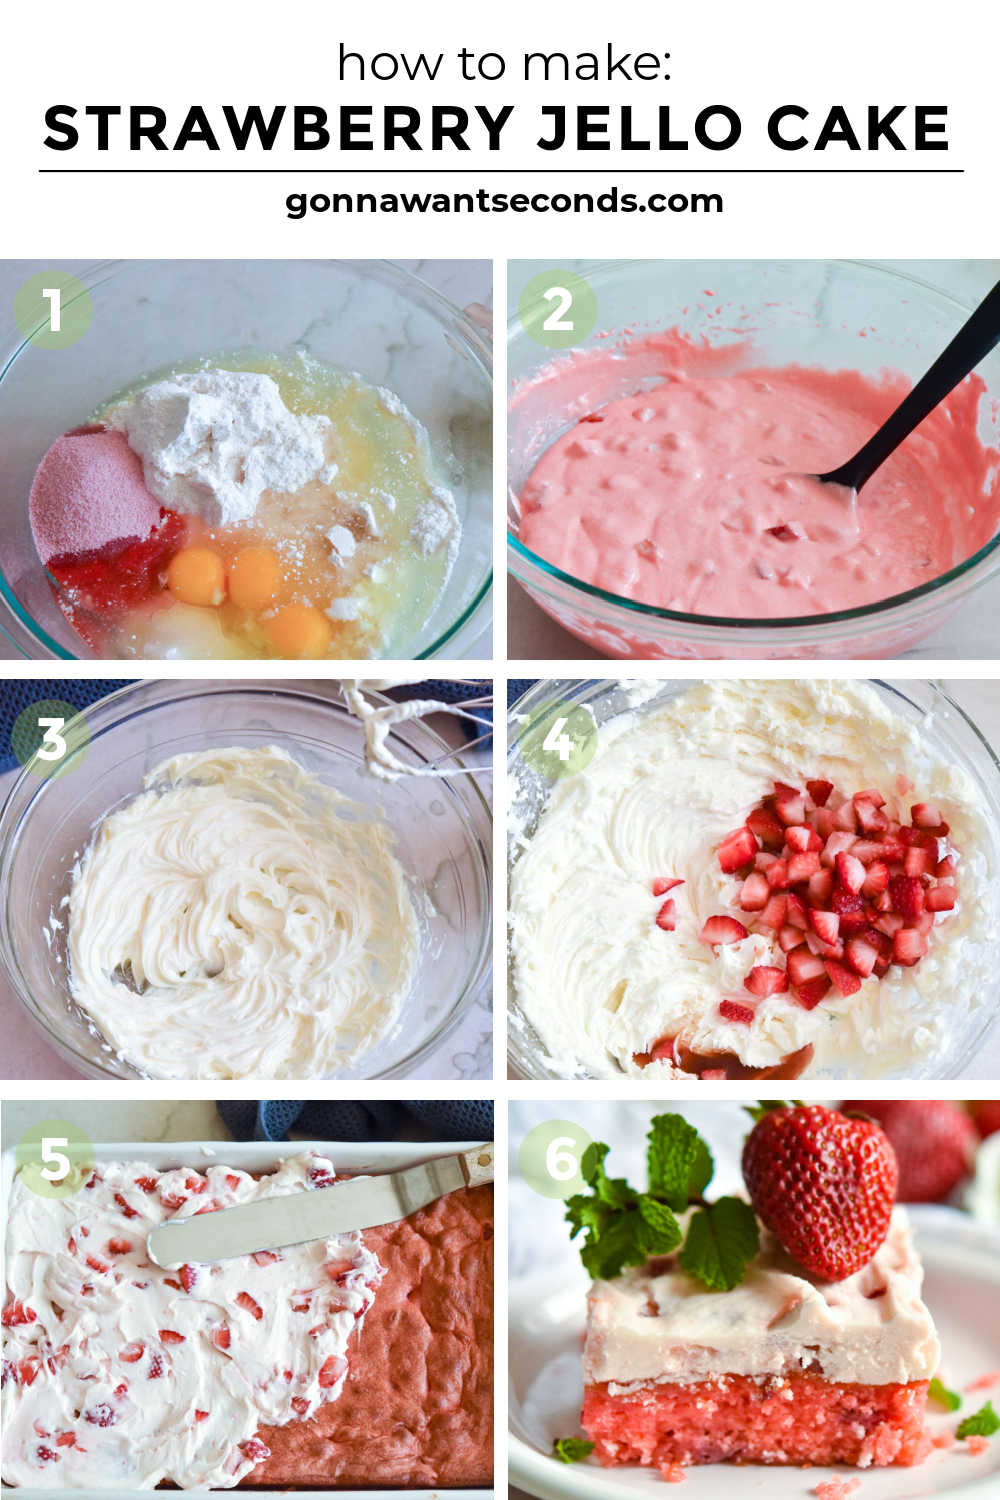 Step by step how to make strawberry jello cake